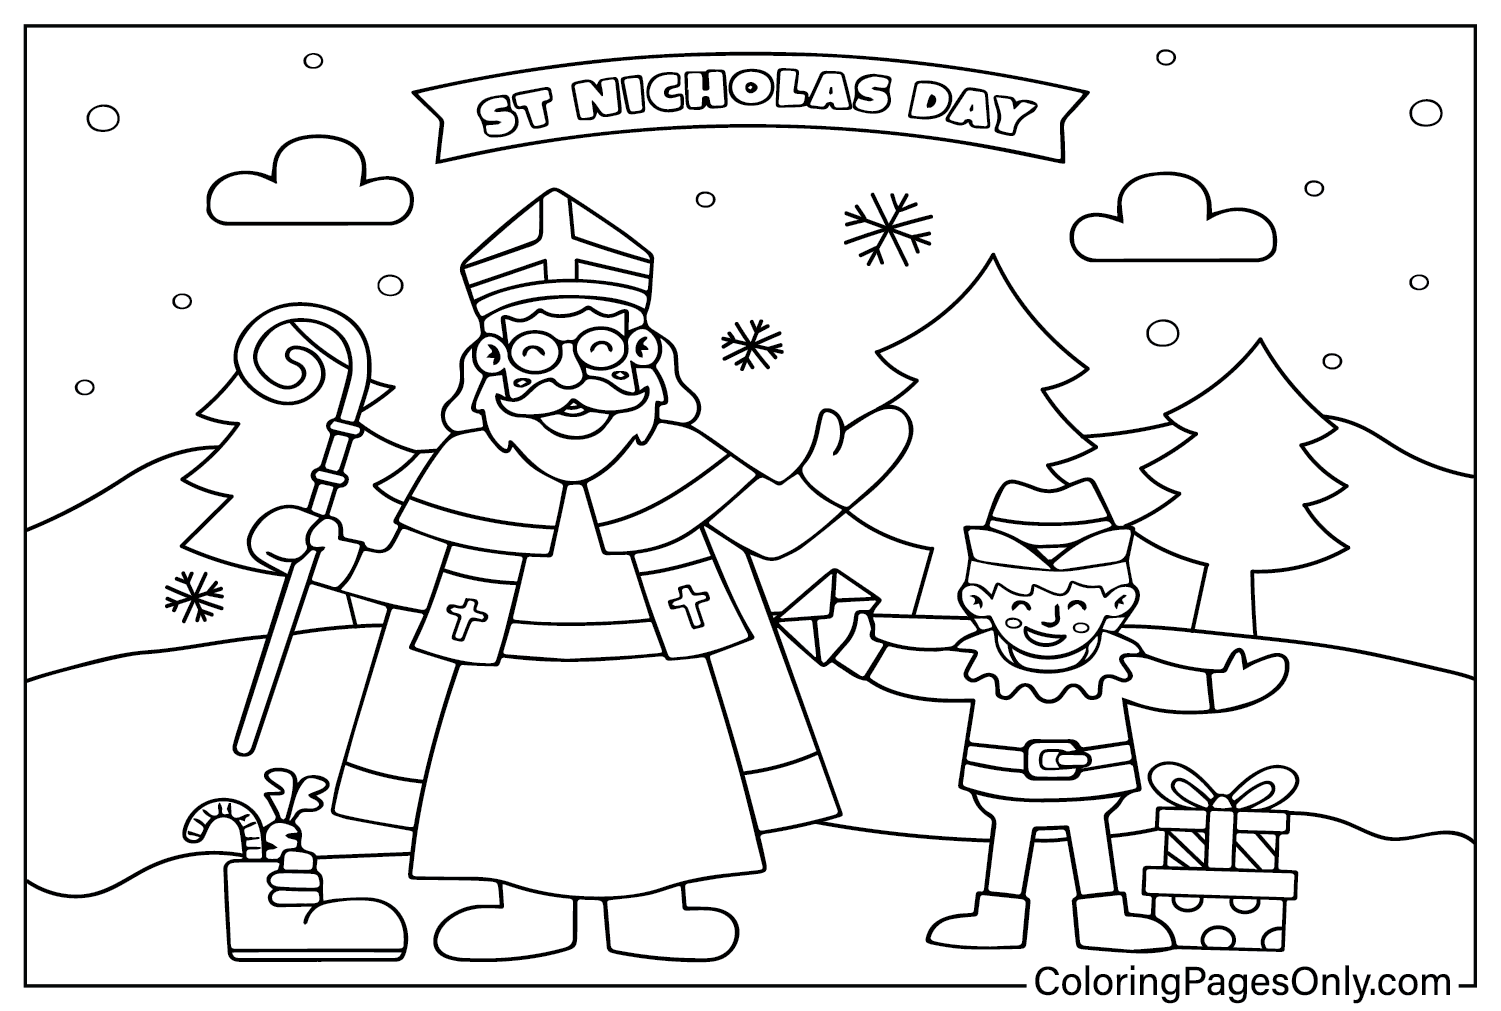 Saint Nicholas Day Coloring Page Printable from Saint Nicholas Day